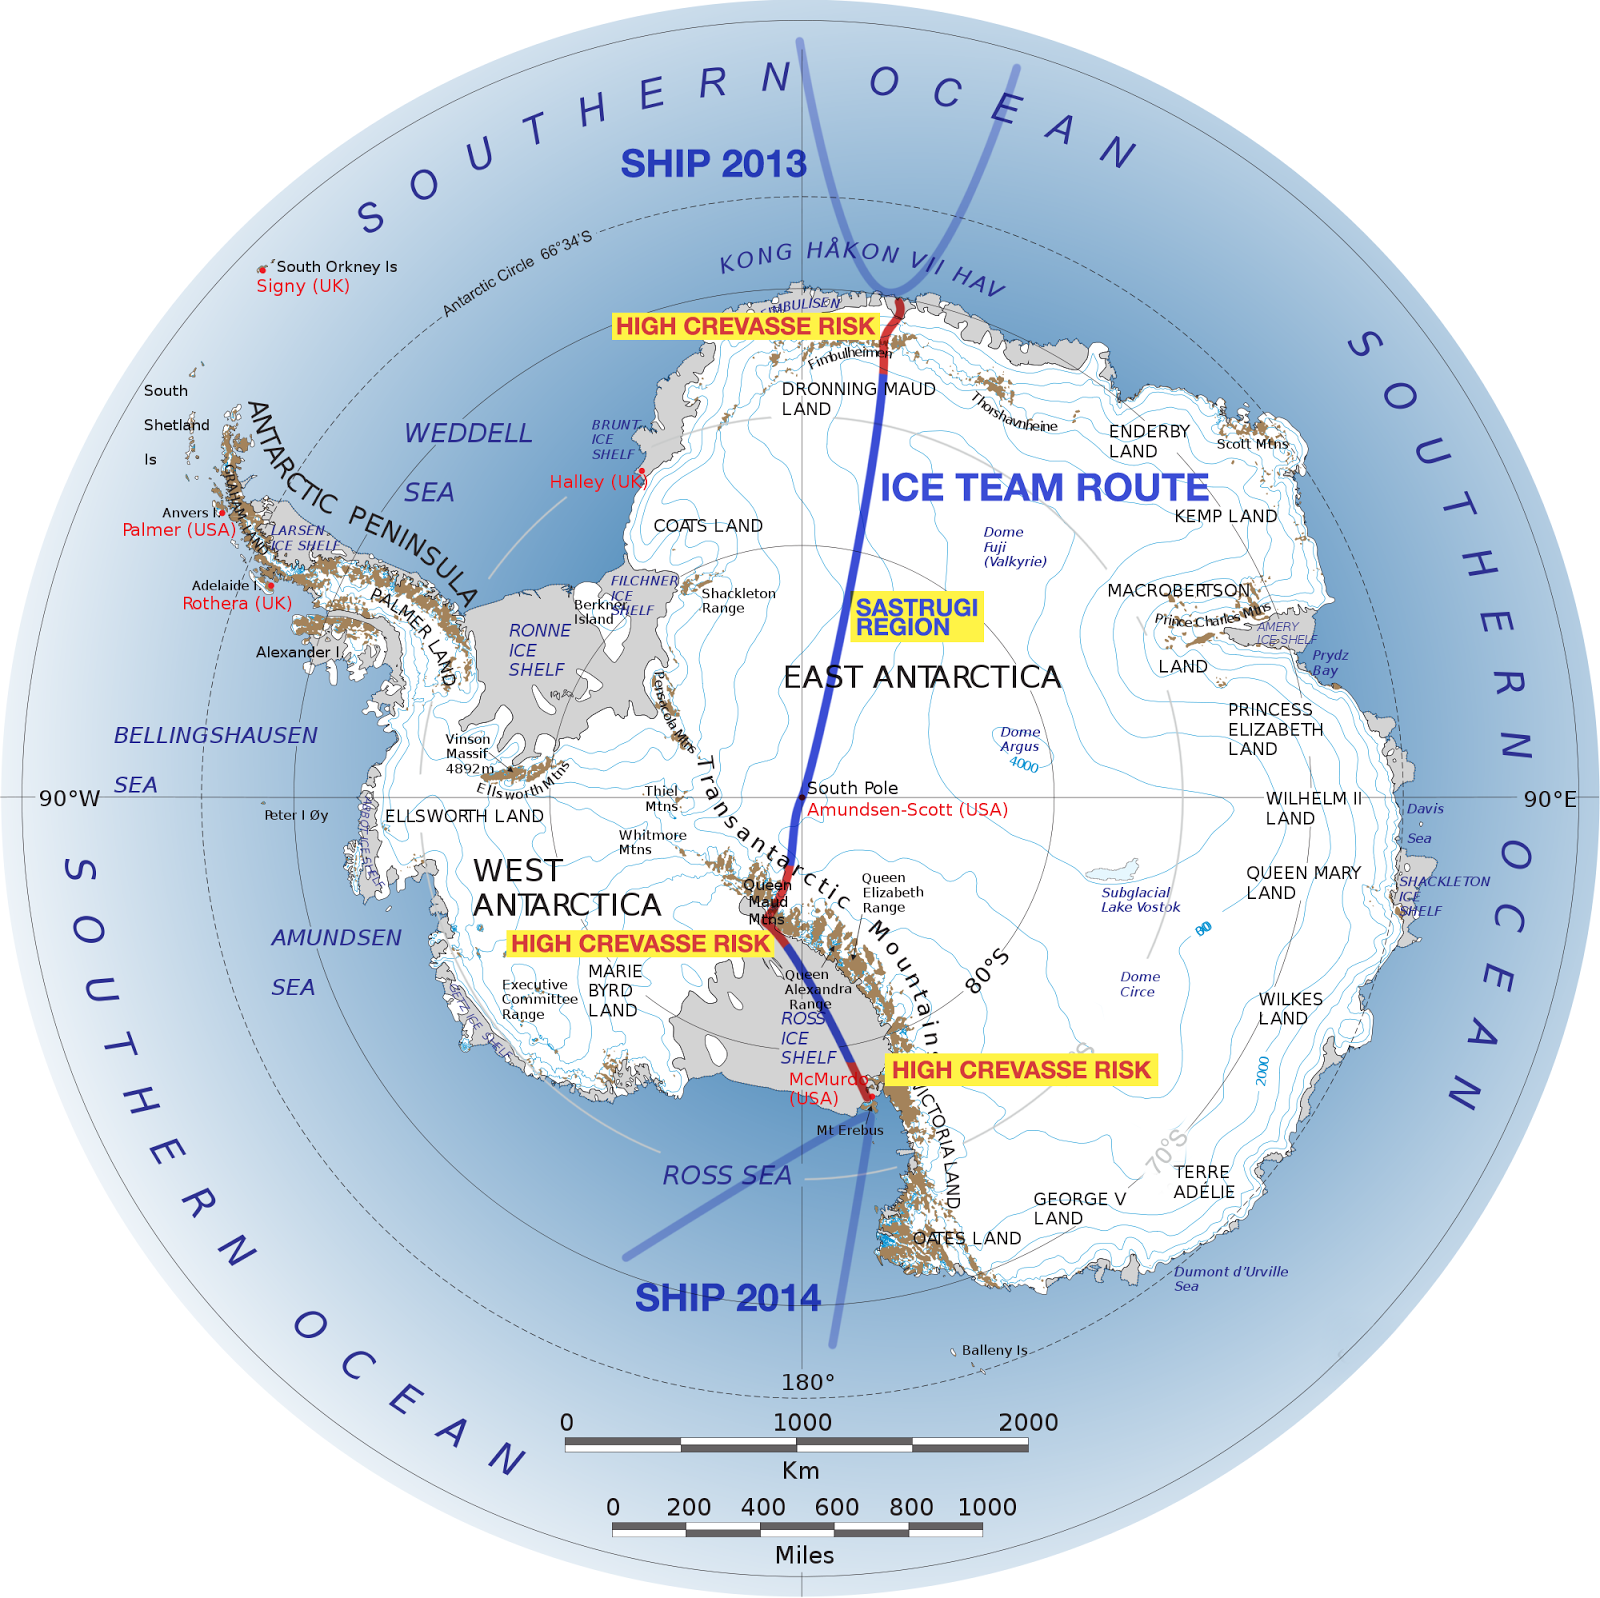 Местоположение антарктиды. Станция Амундсен Скотт в Антарктиде на карте. Полярная станция Амундсен-Скотт на карте Антарктиды. Станция Амундсен в Антарктиде на карте. Гора Винсон на карте Антарктиды.